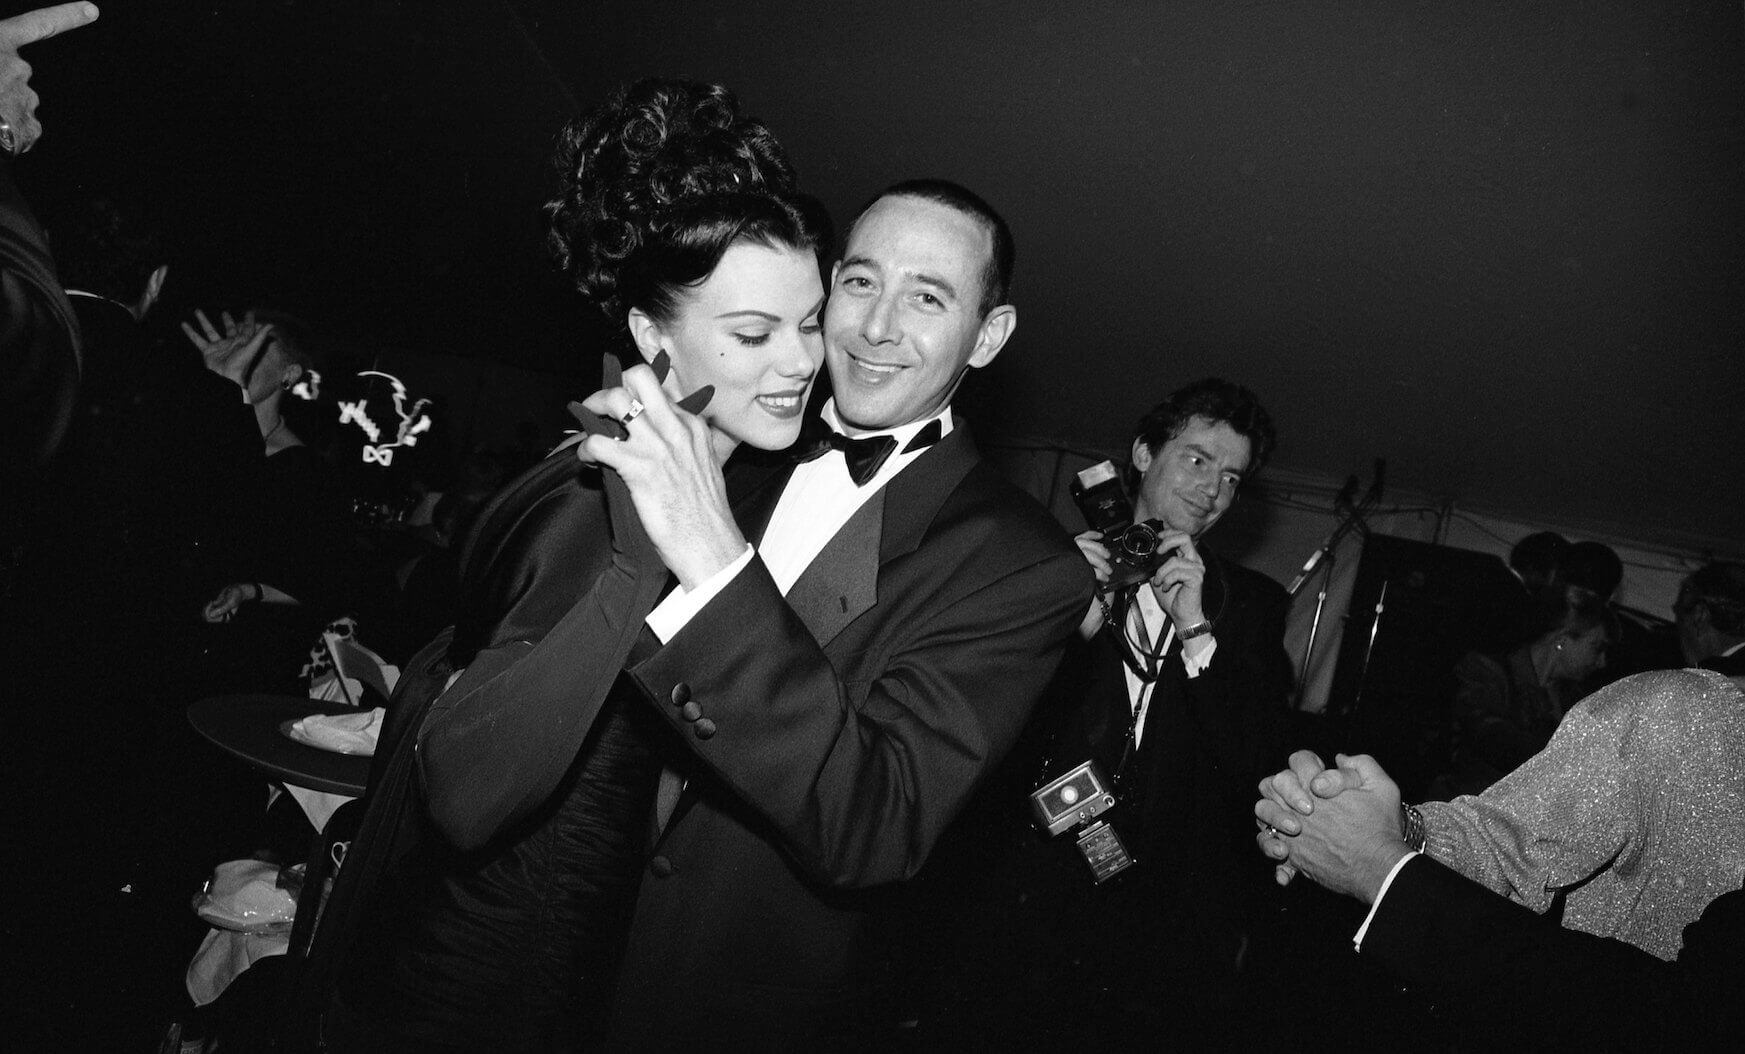 A black and white photo of Paul Reubens and Debi Mazar dancing